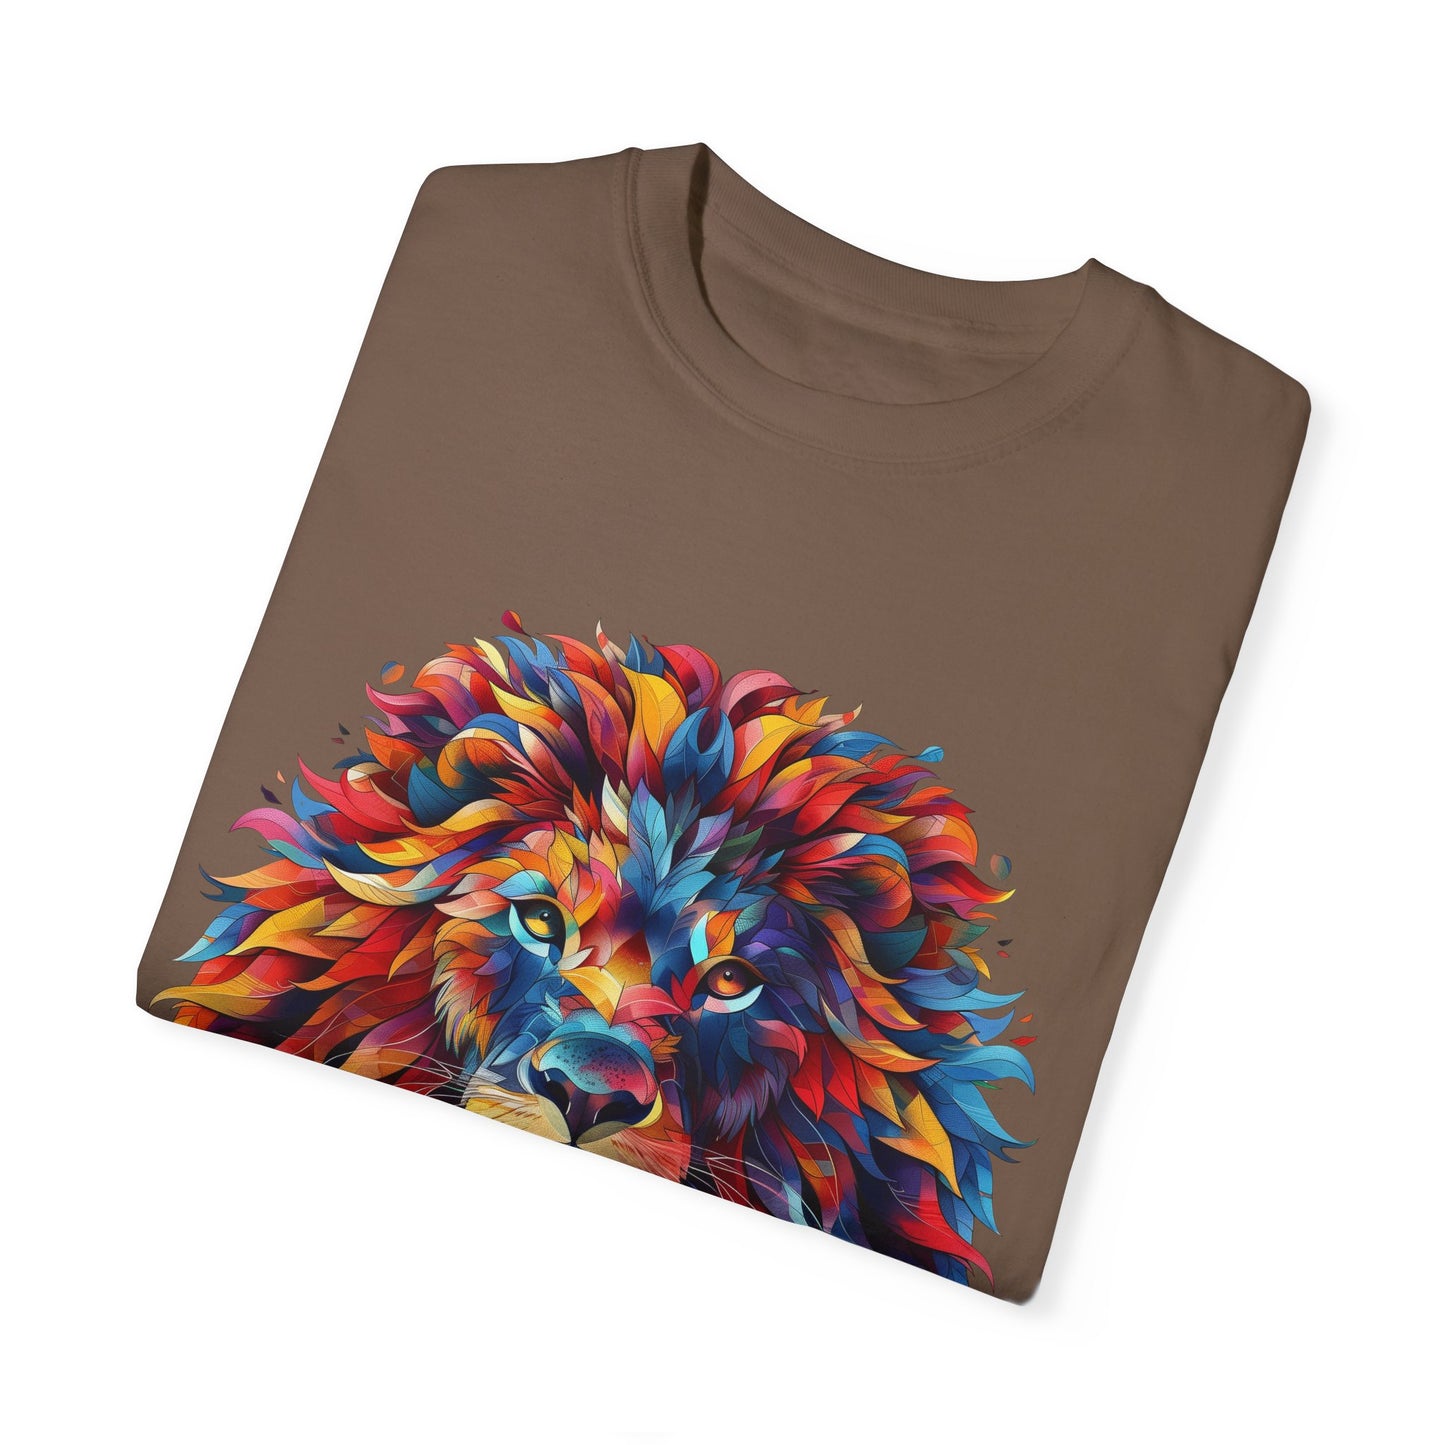 Lion Head Cool Graphic Design Novelty Unisex Garment-dyed T-shirt Cotton Funny Humorous Graphic Soft Premium Unisex Men Women Espresso T-shirt Birthday Gift-59